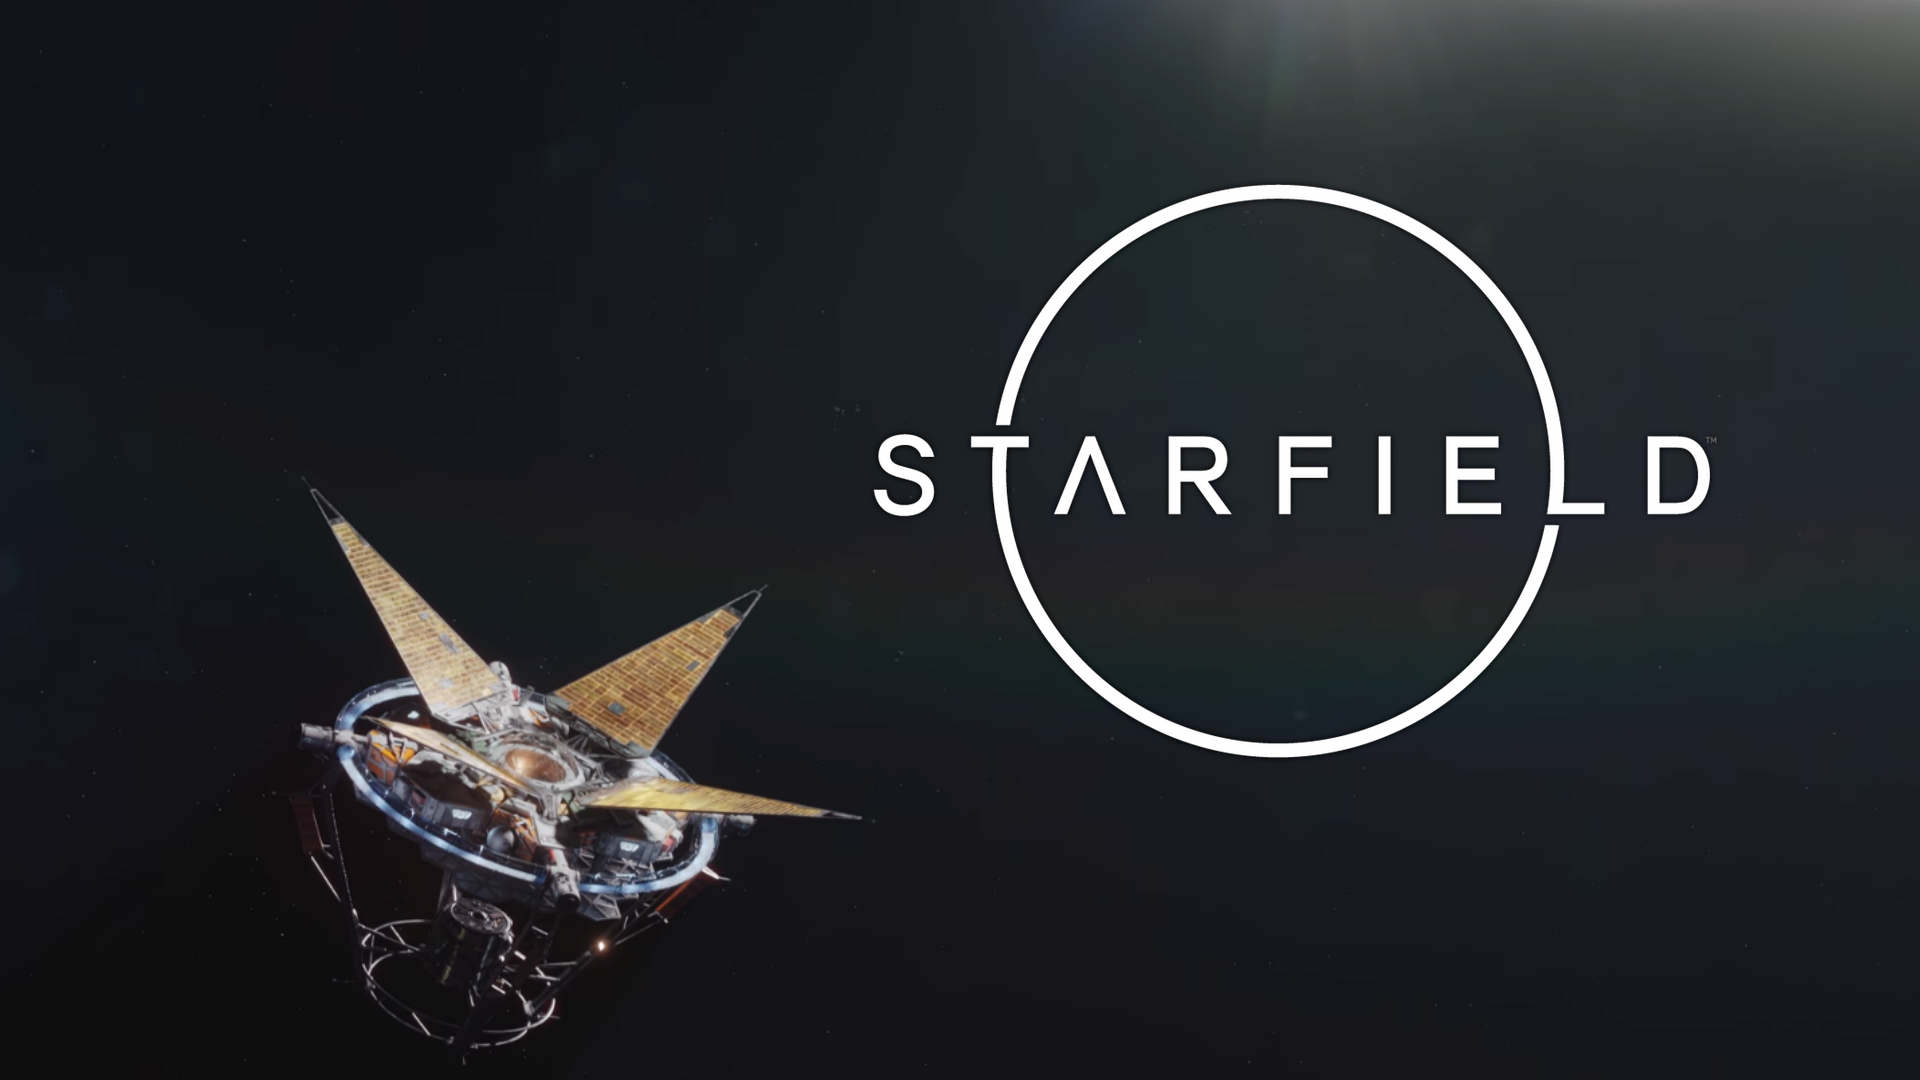 Starfield Reveal Valoros "La Atendon", Diras Pete Hines de Bethesda